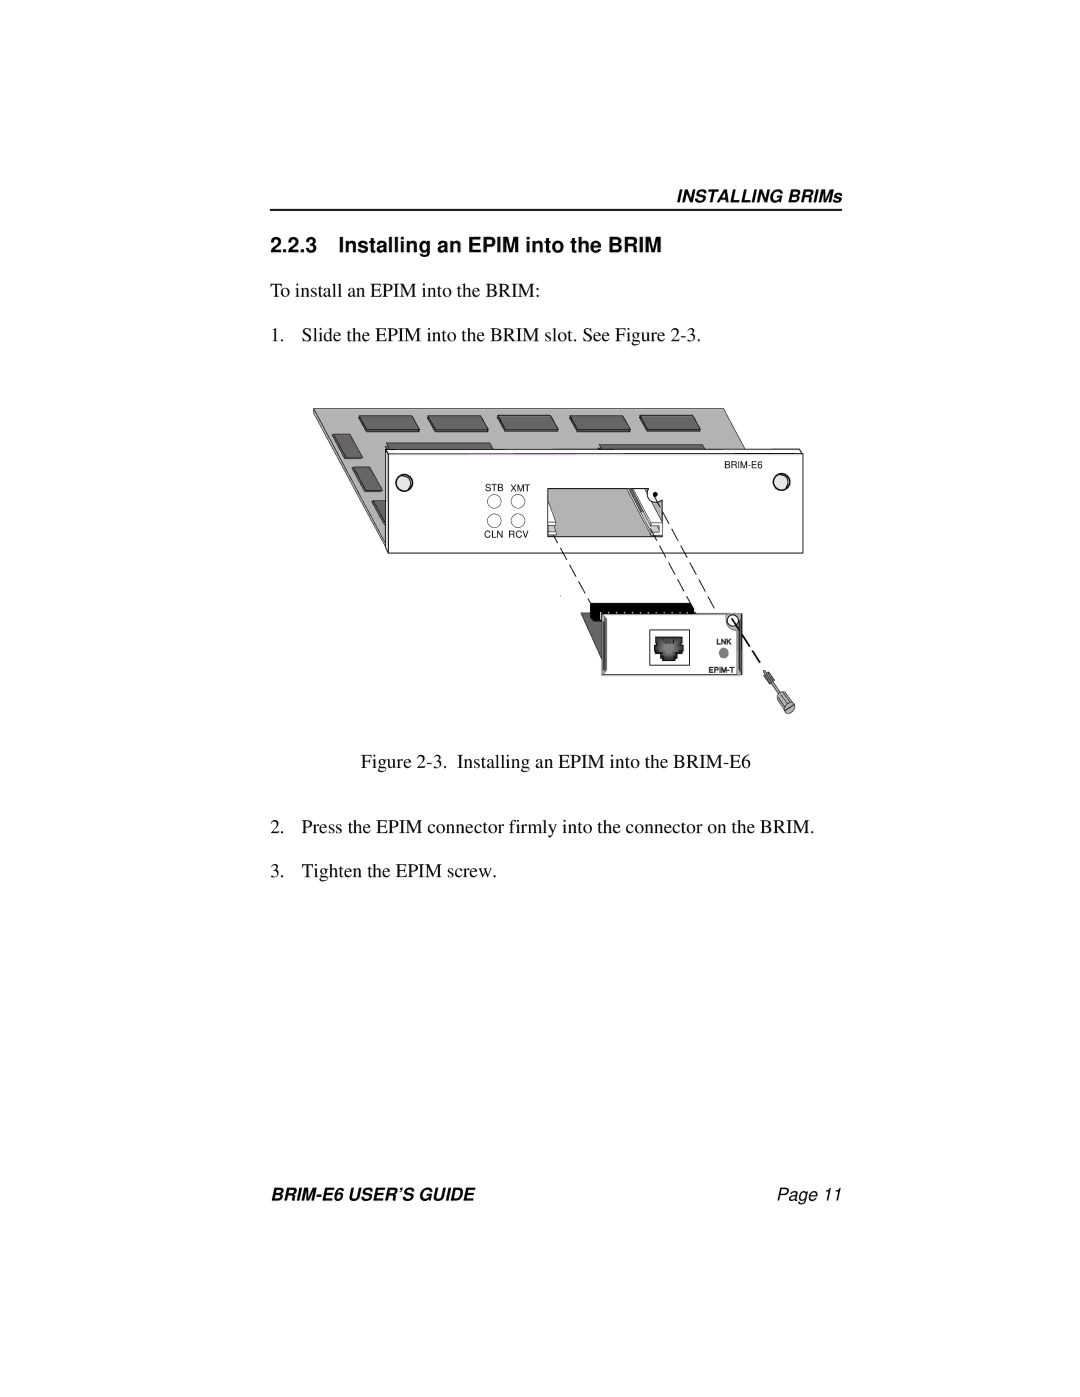 Enterasys Networks BRIM-E6 manual Installing an Epim into the Brim 